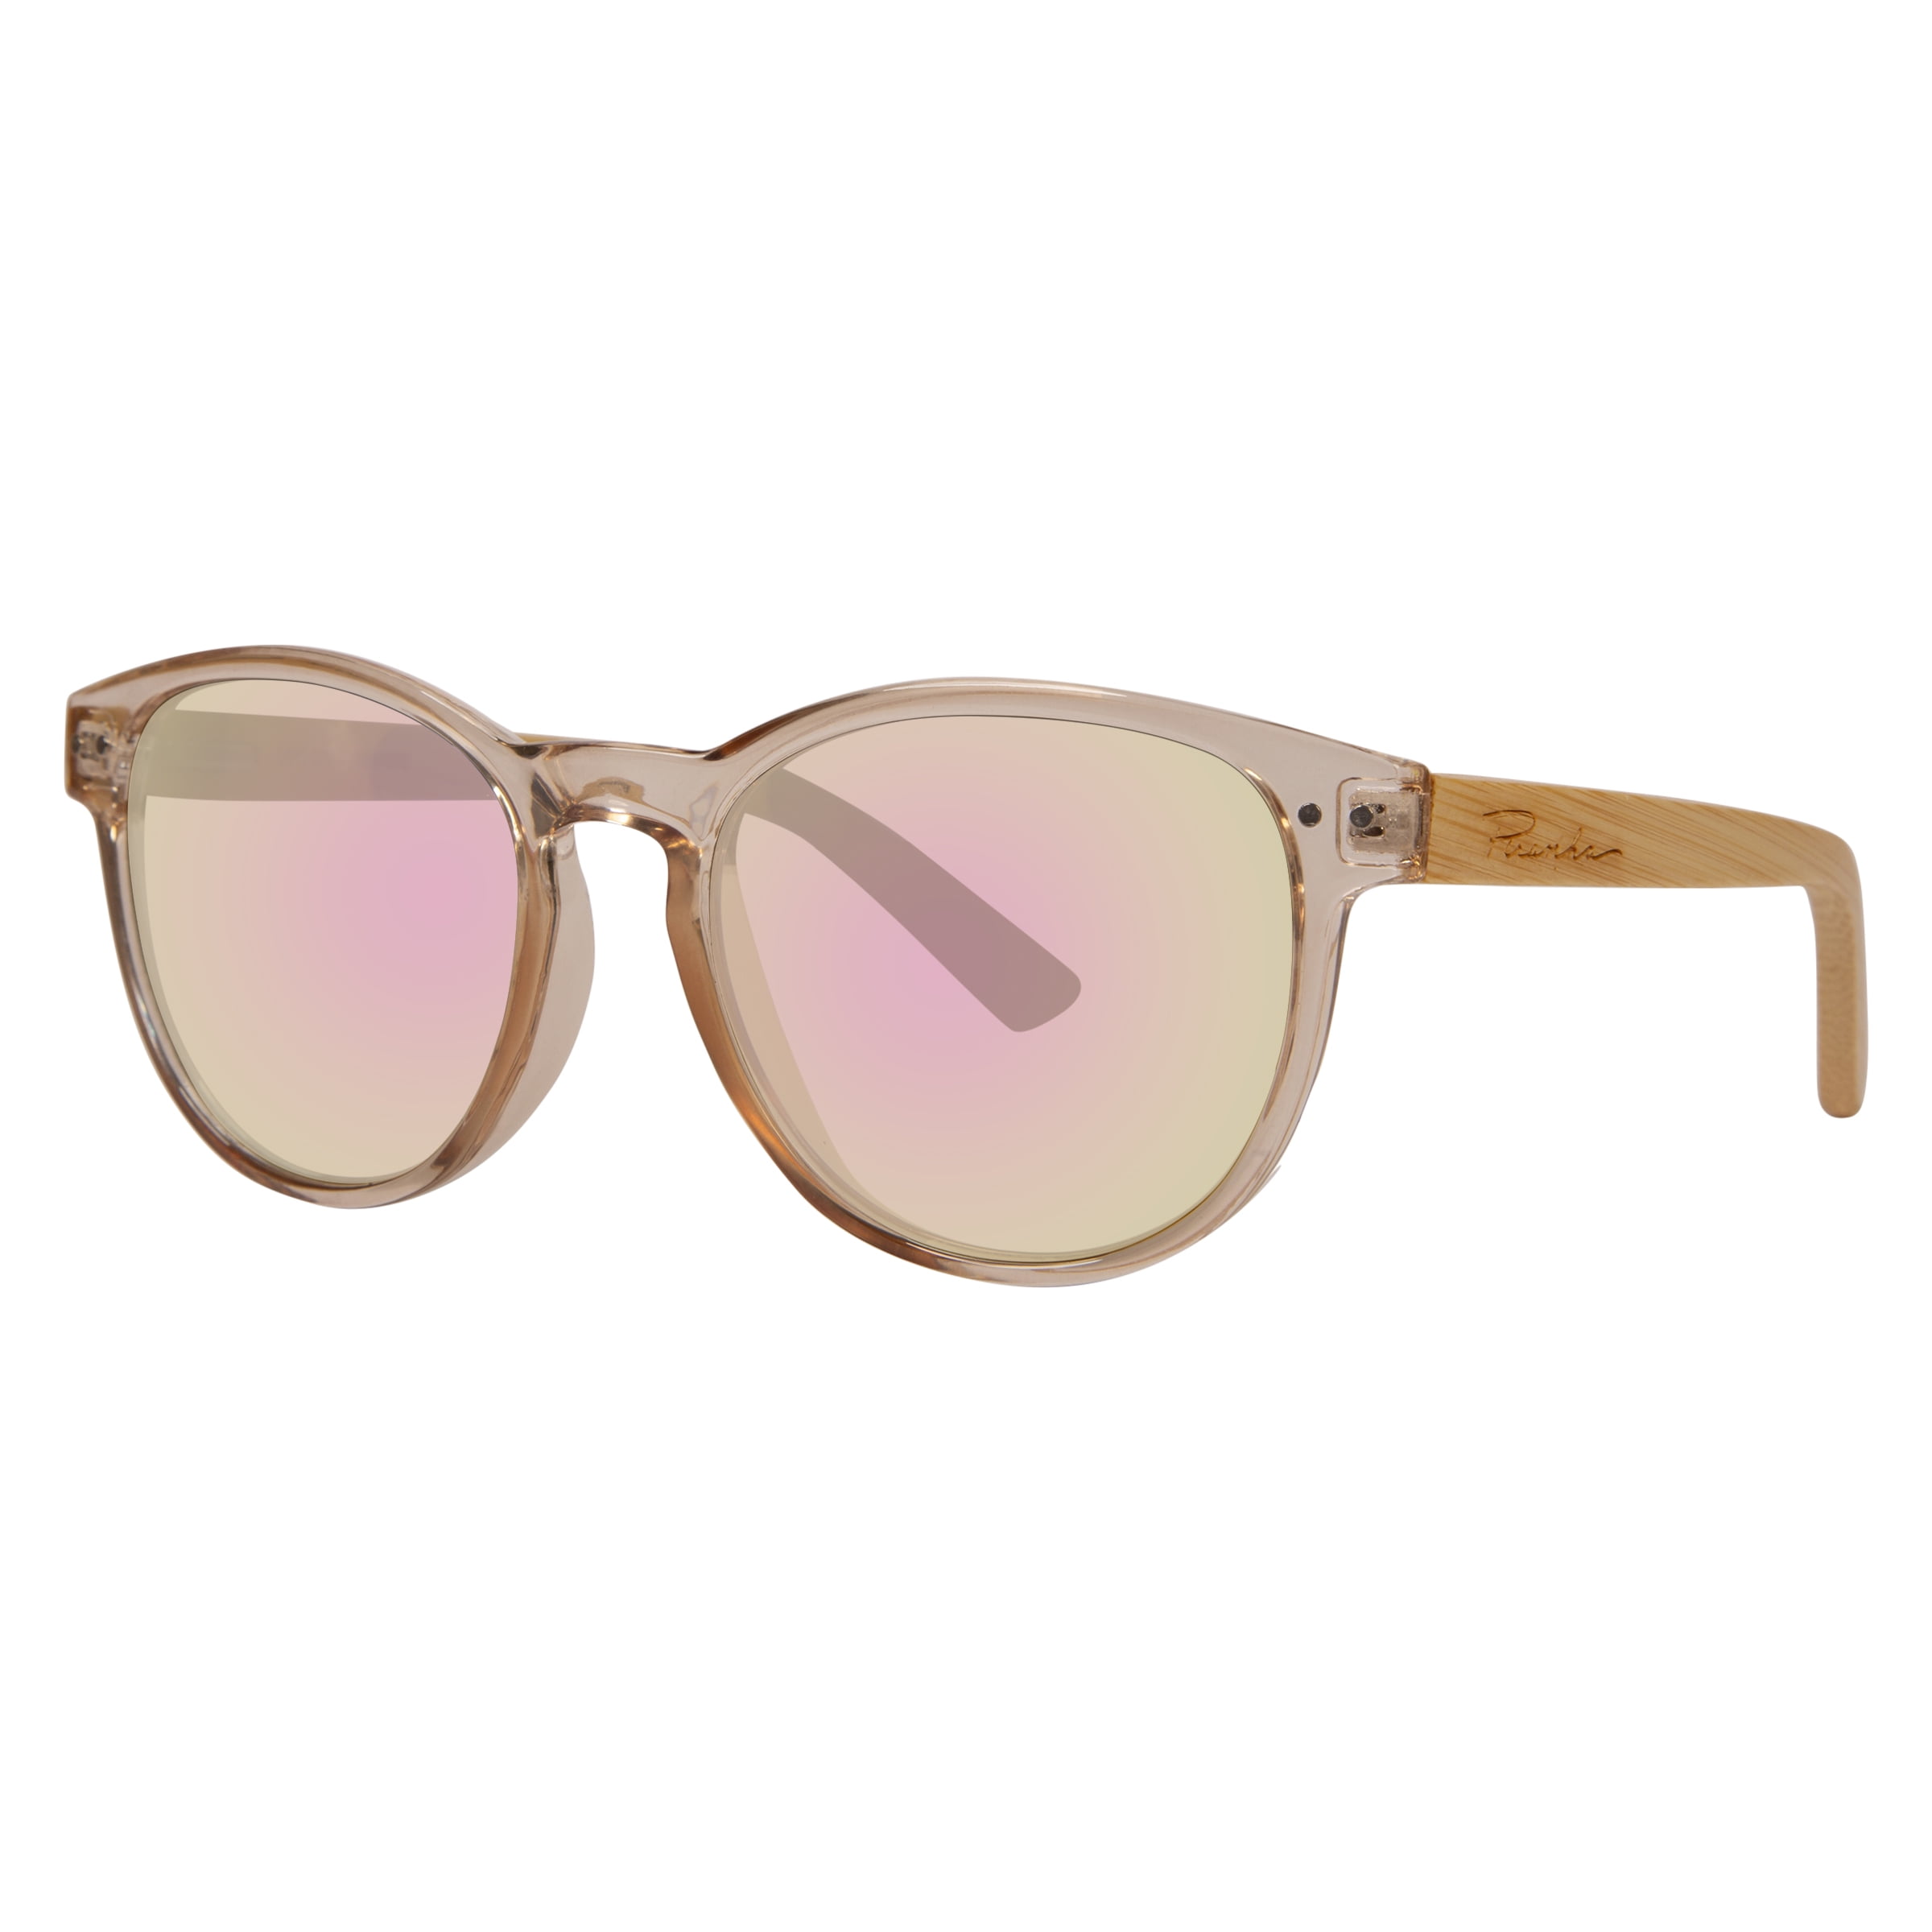 Piranha Eyewear Stax II Bamboo Sunglasses with Round Pink Frame